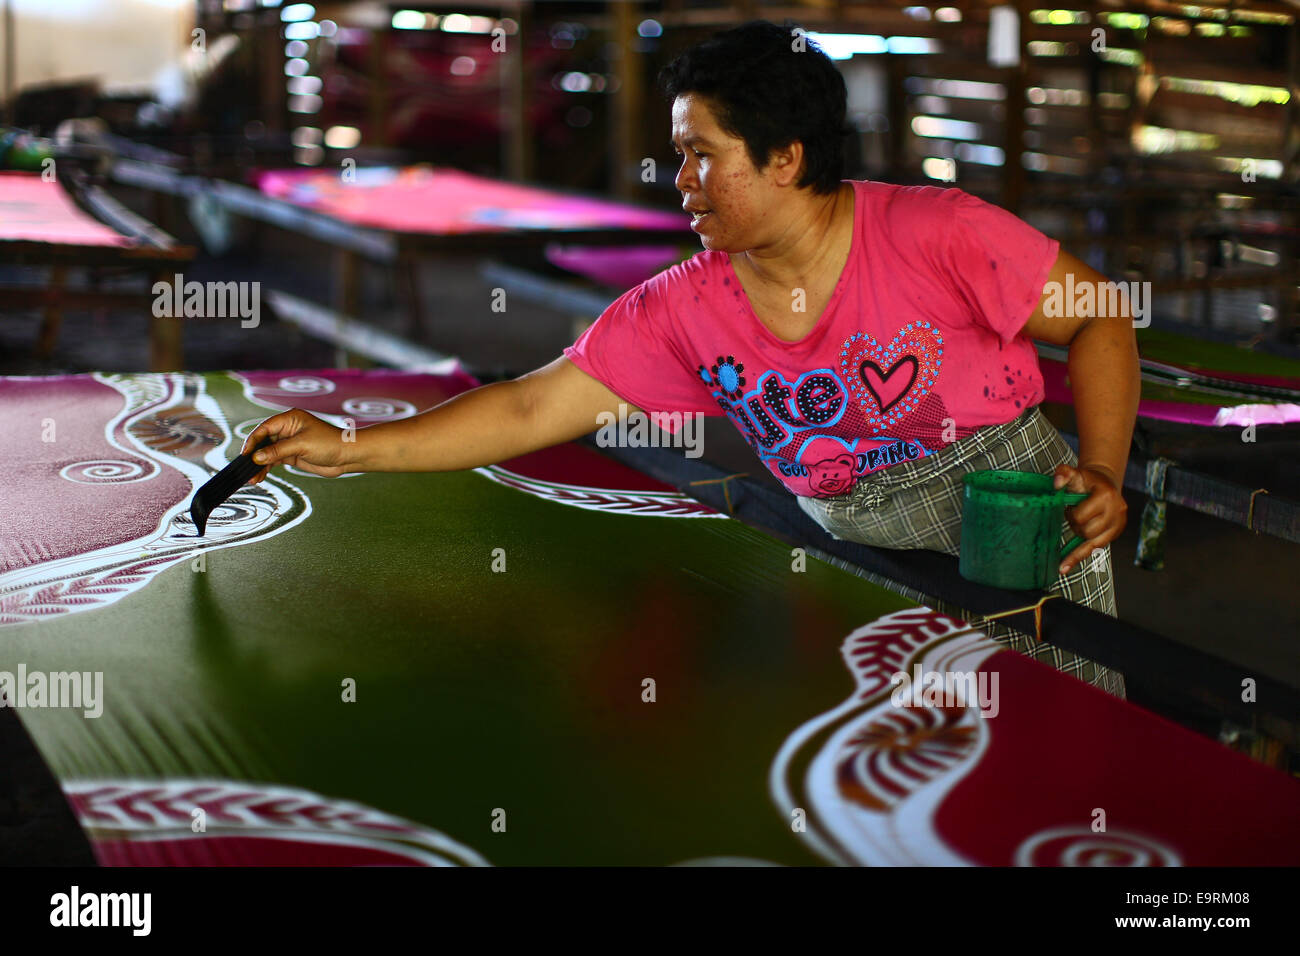 Preparing the melting wax for Batik Chanting traditional painting. Stock Photo